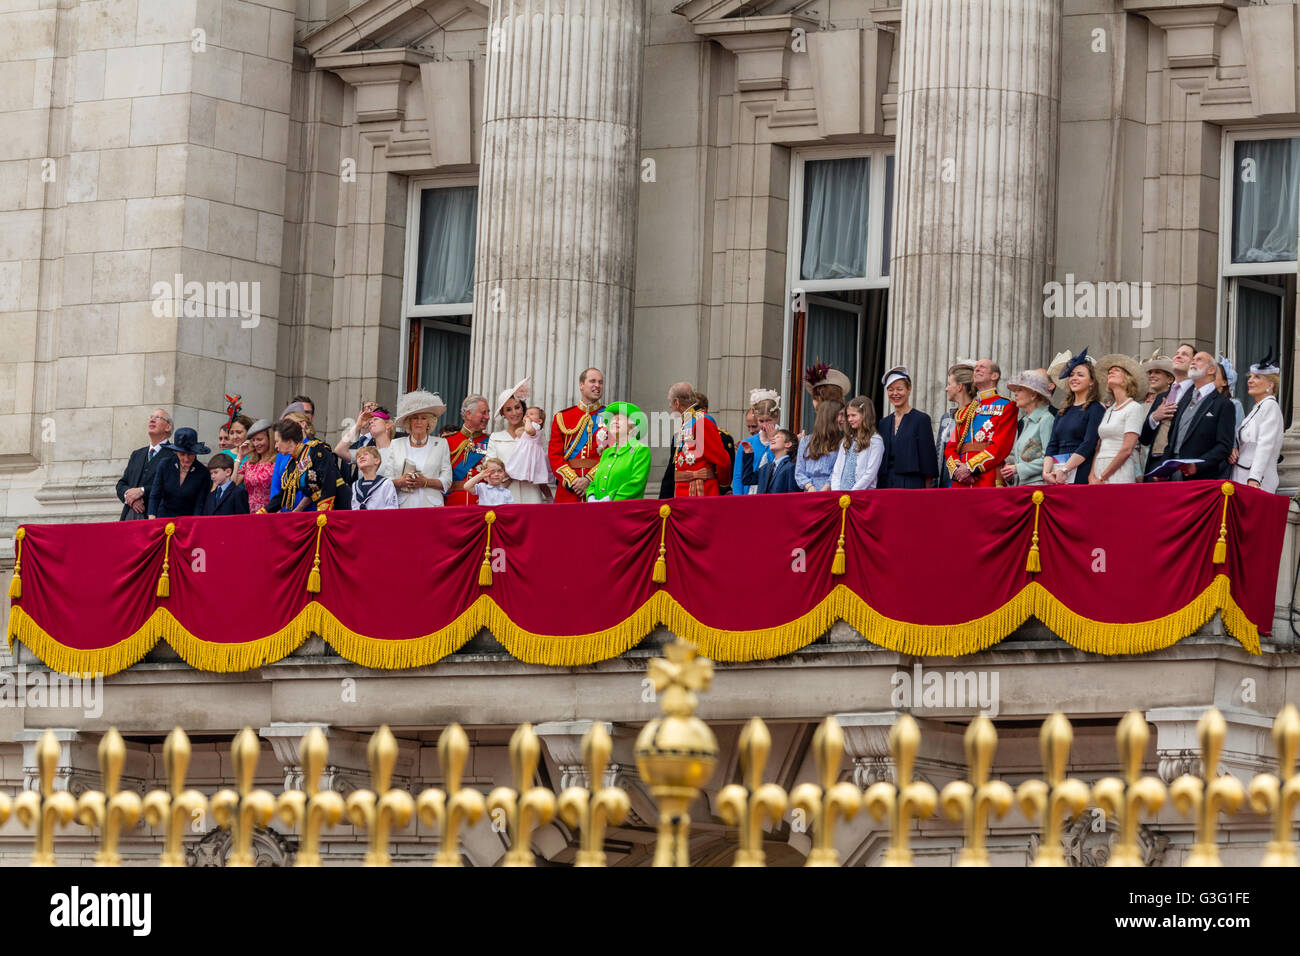 The Royal Family Celebrating the Queens Birthday on the balcony of Buckingham Palace London UK 2016 Stock Photo